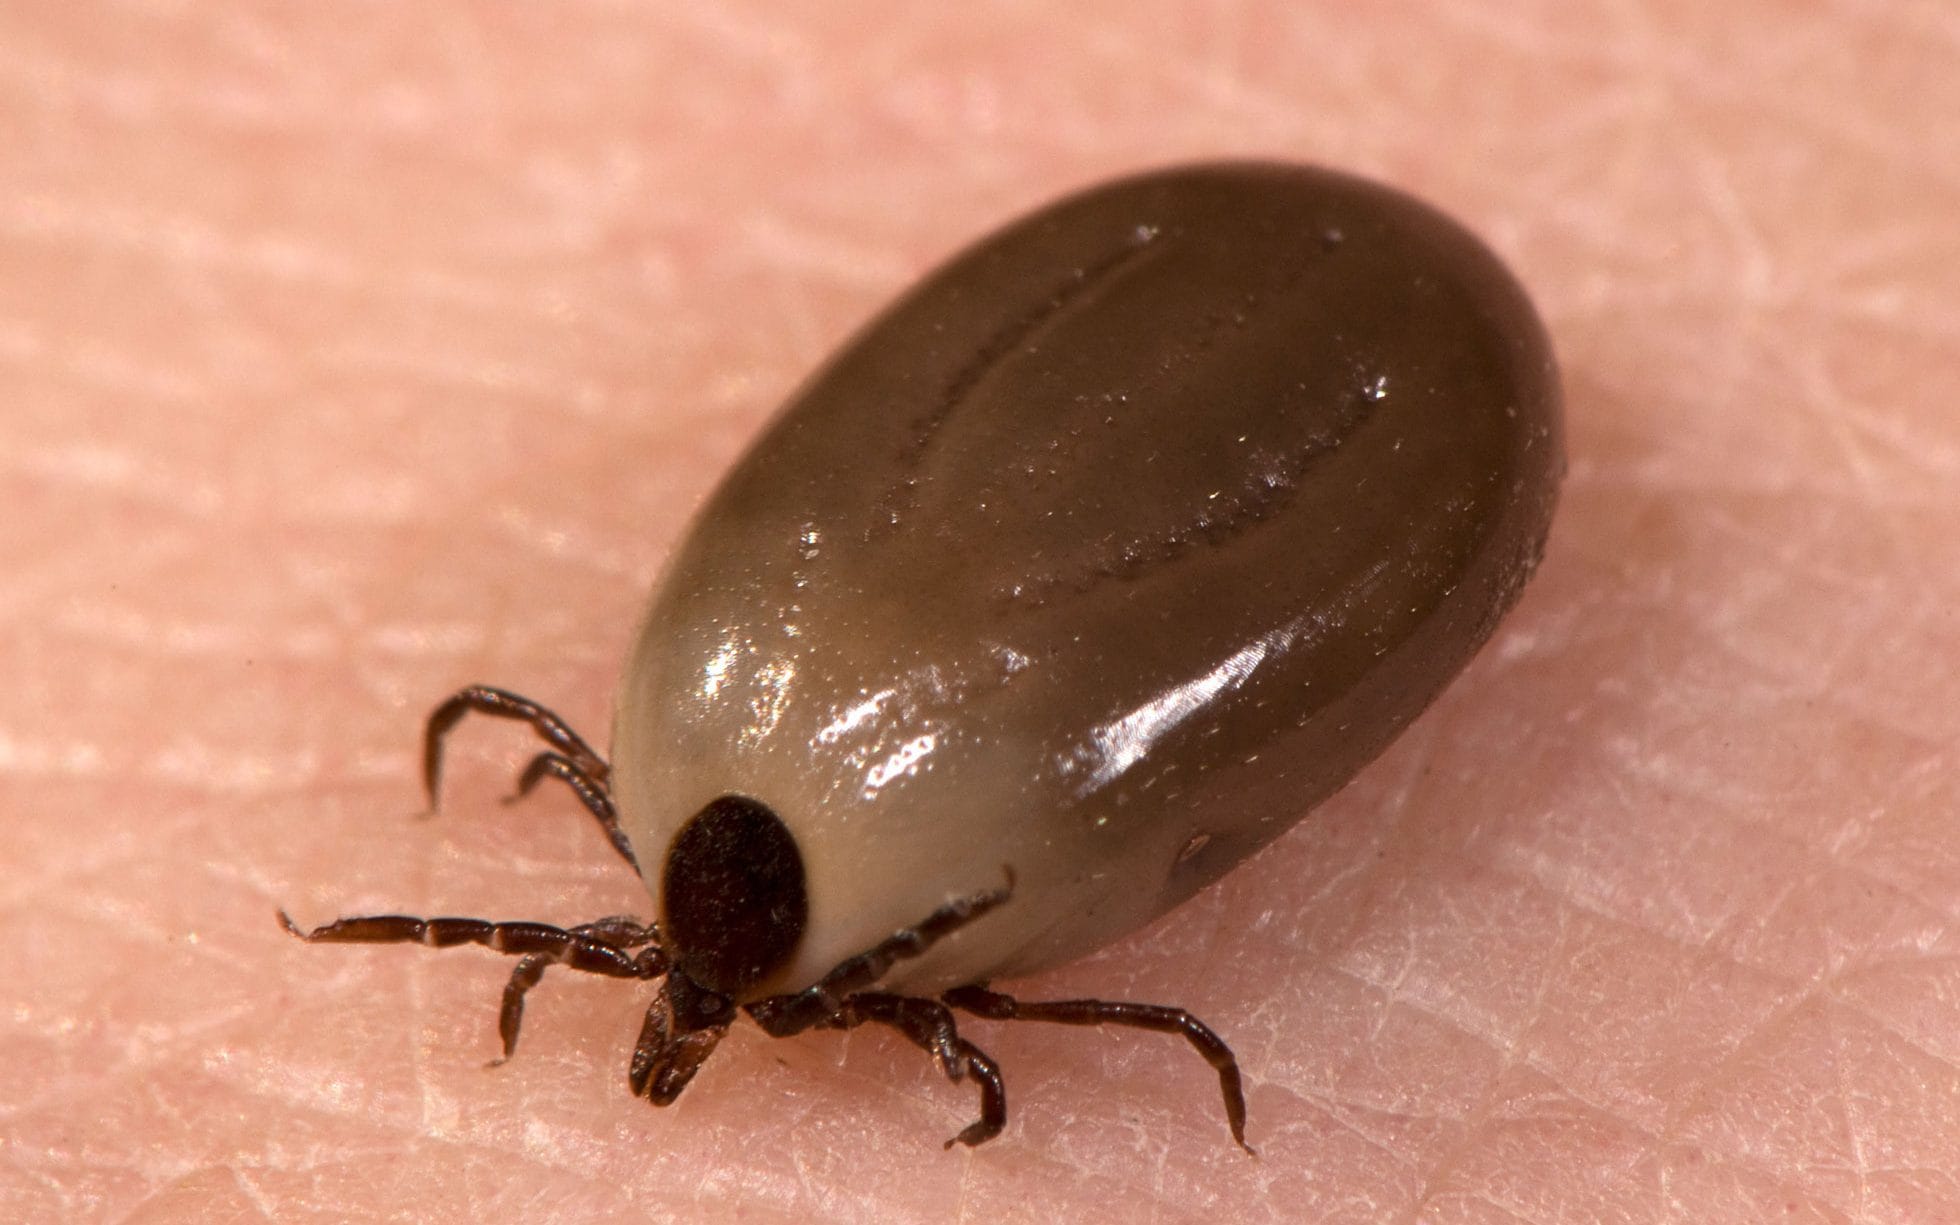 France Launches “Tick Alert” App: Lyme Disease Increasing